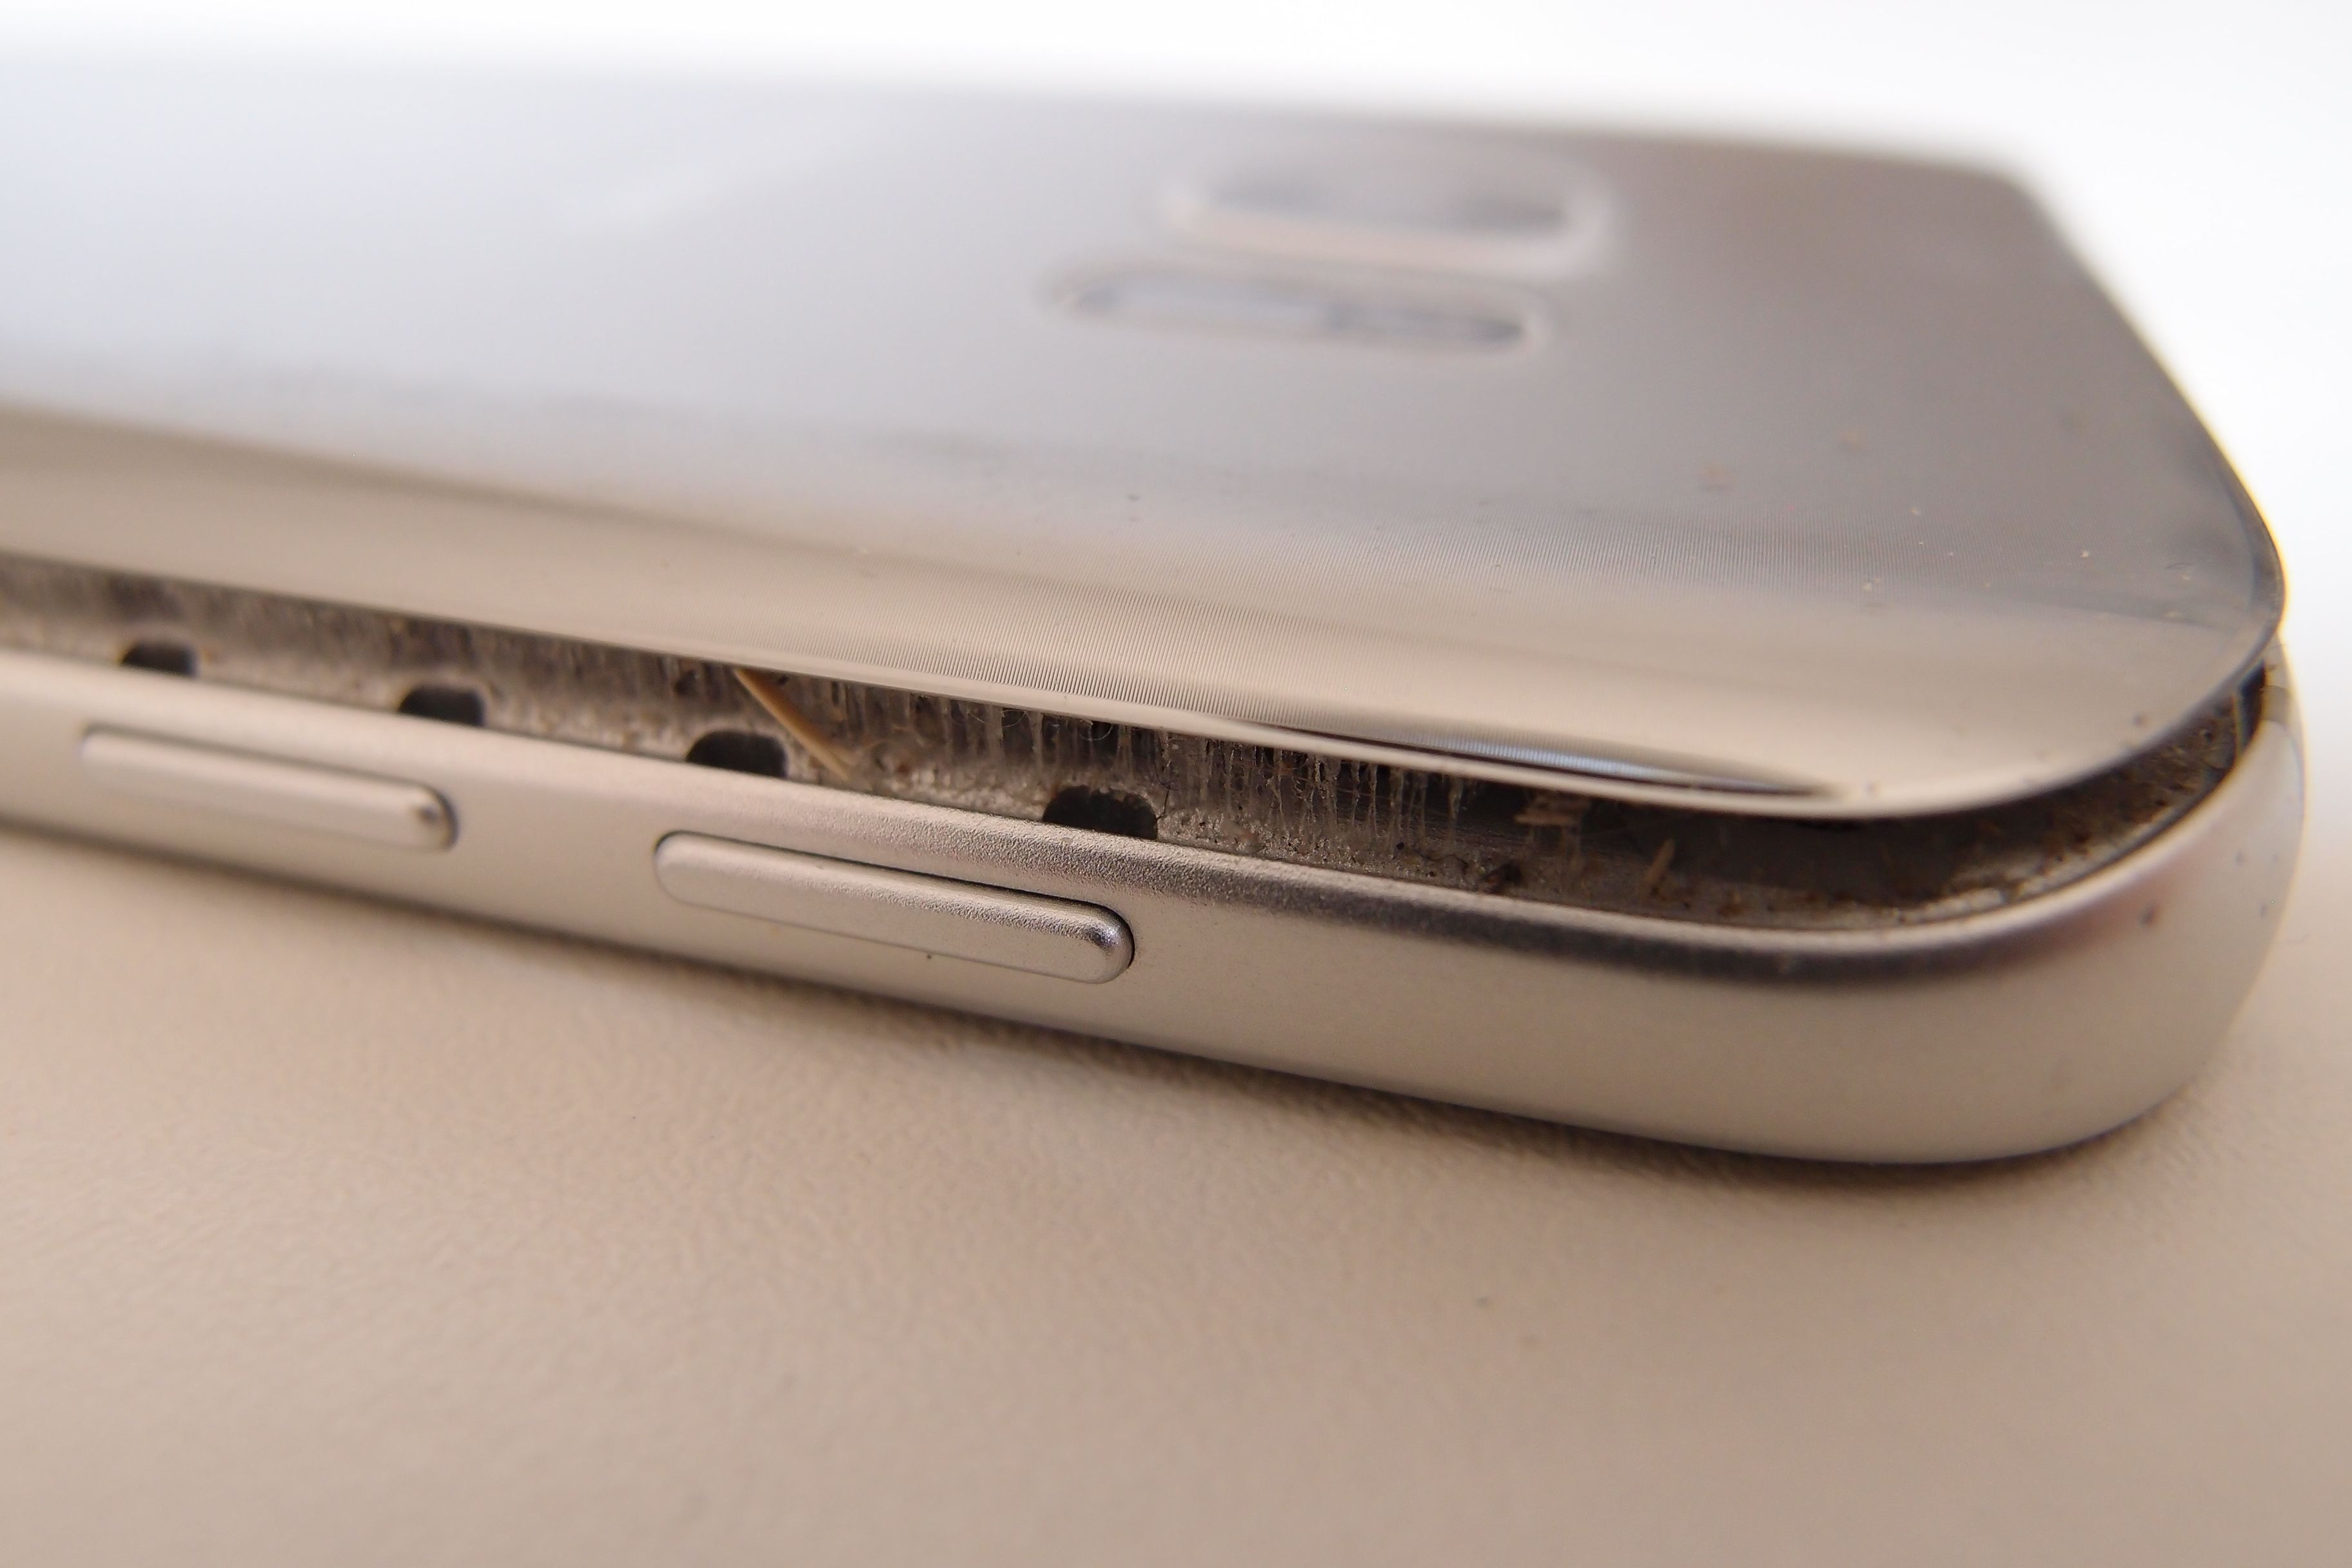 S7 case back peeling off - Samsung Community